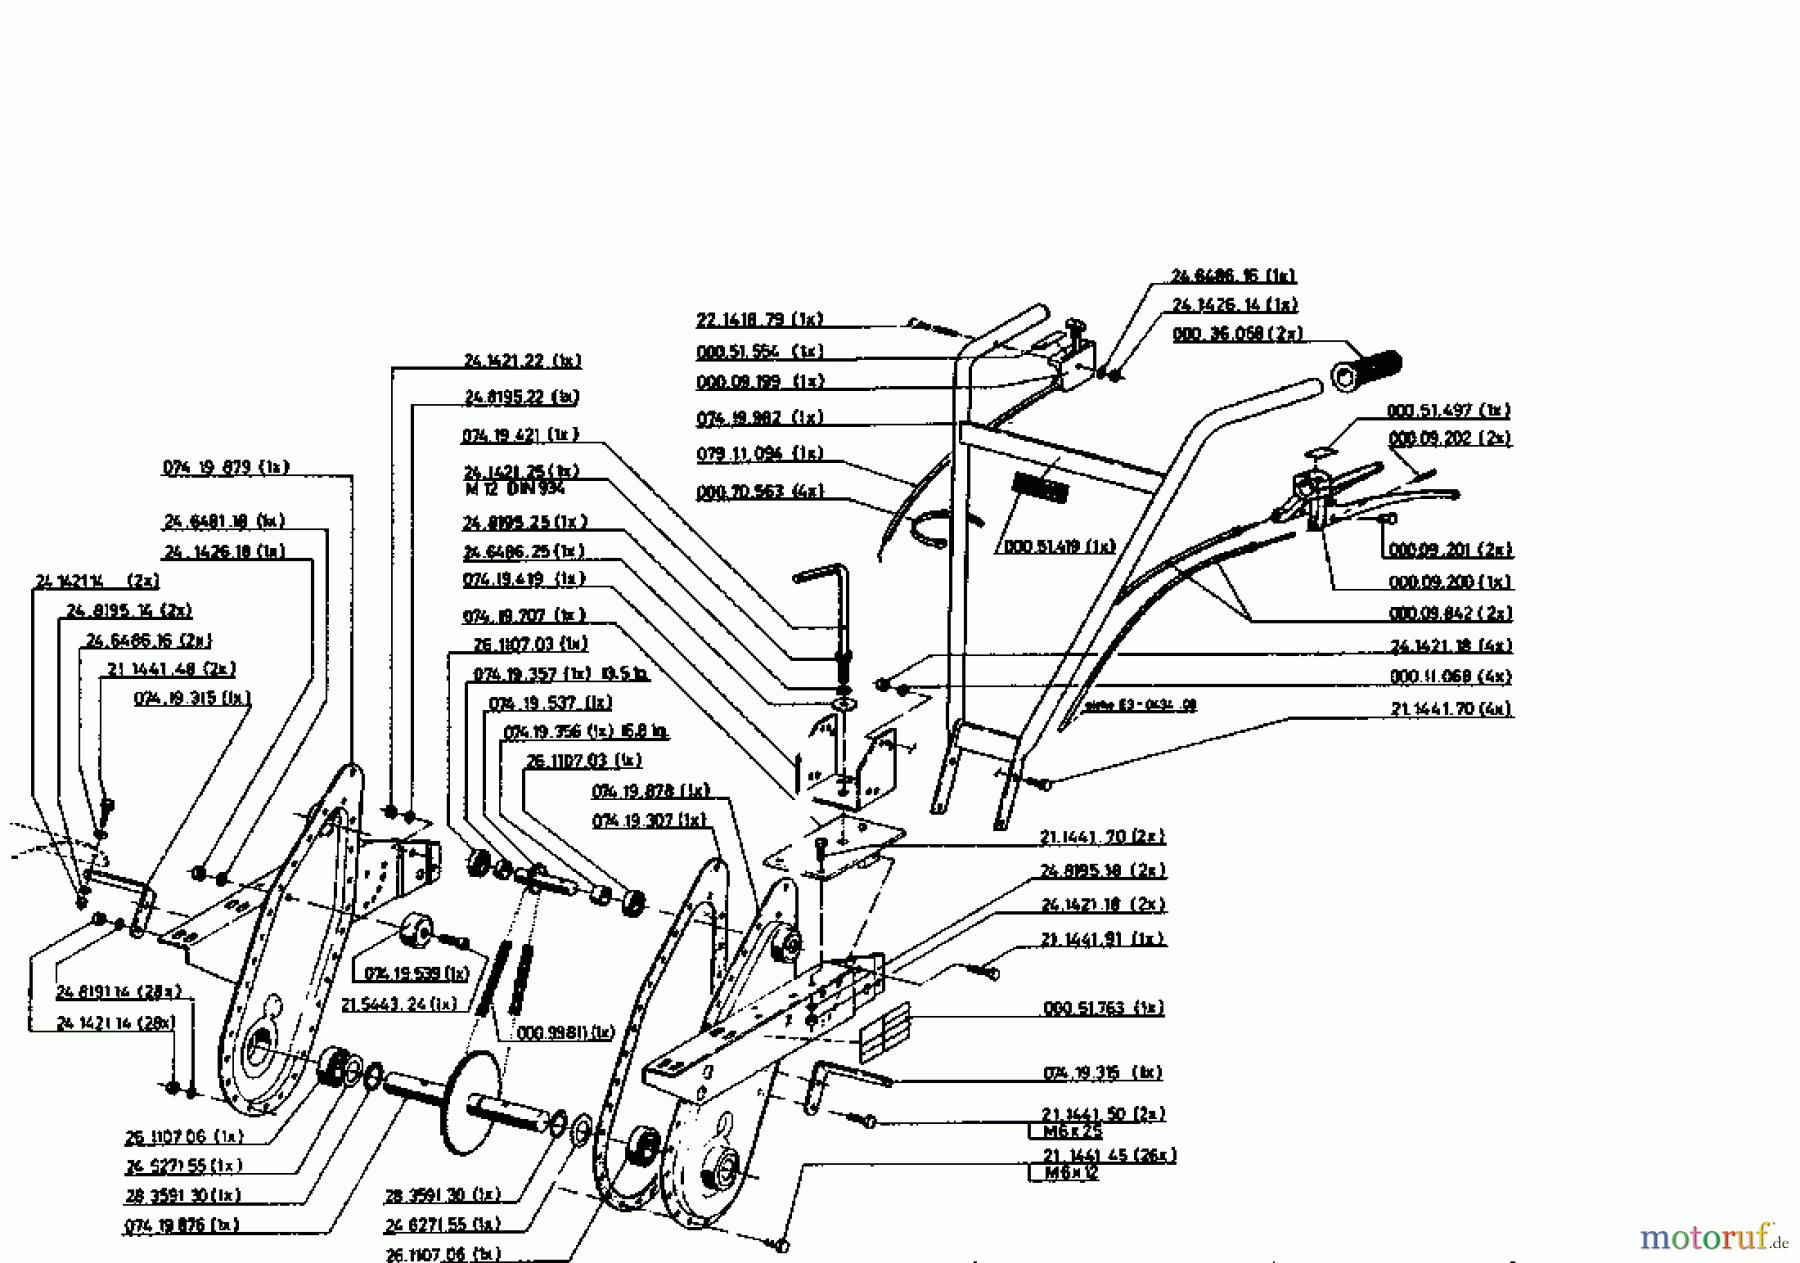  Gutbrod Tillers MB 62-52 07518.02  (1995) Basic machine